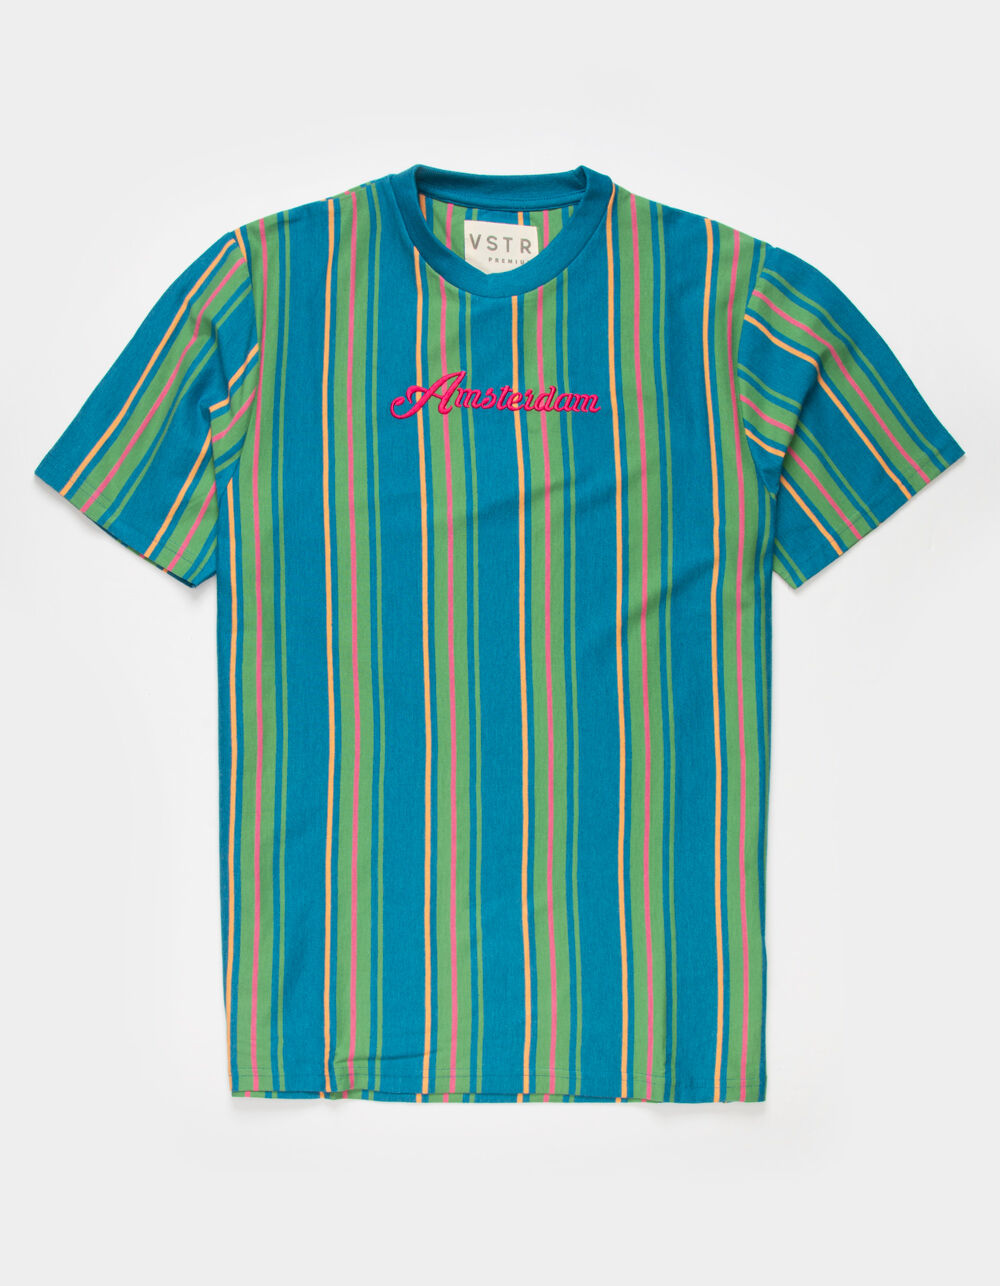 VSTR Amsterdam Stripe Mens T-Shirt - BLUE | Tillys